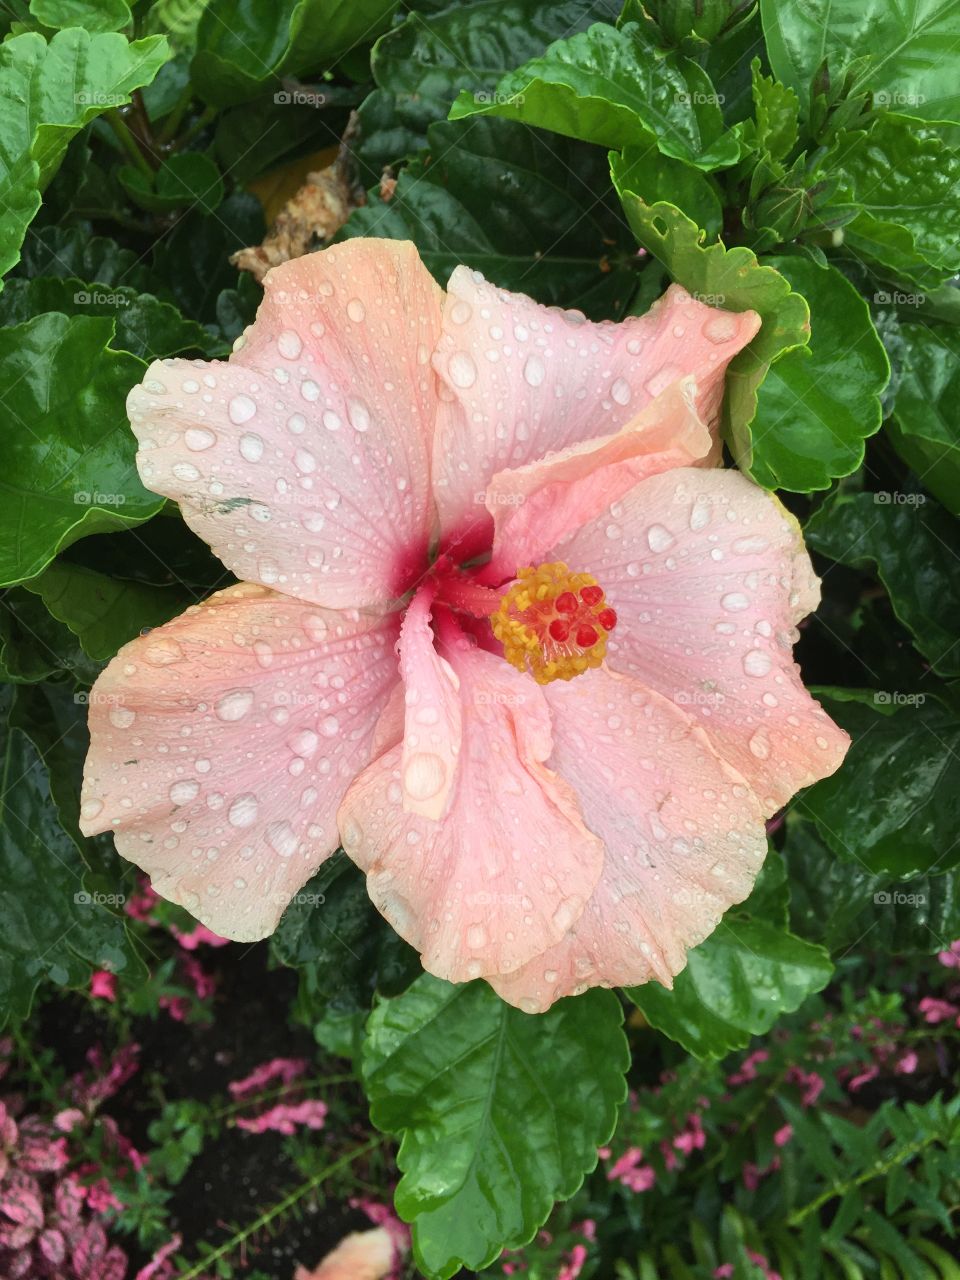 Rain on a pink flower